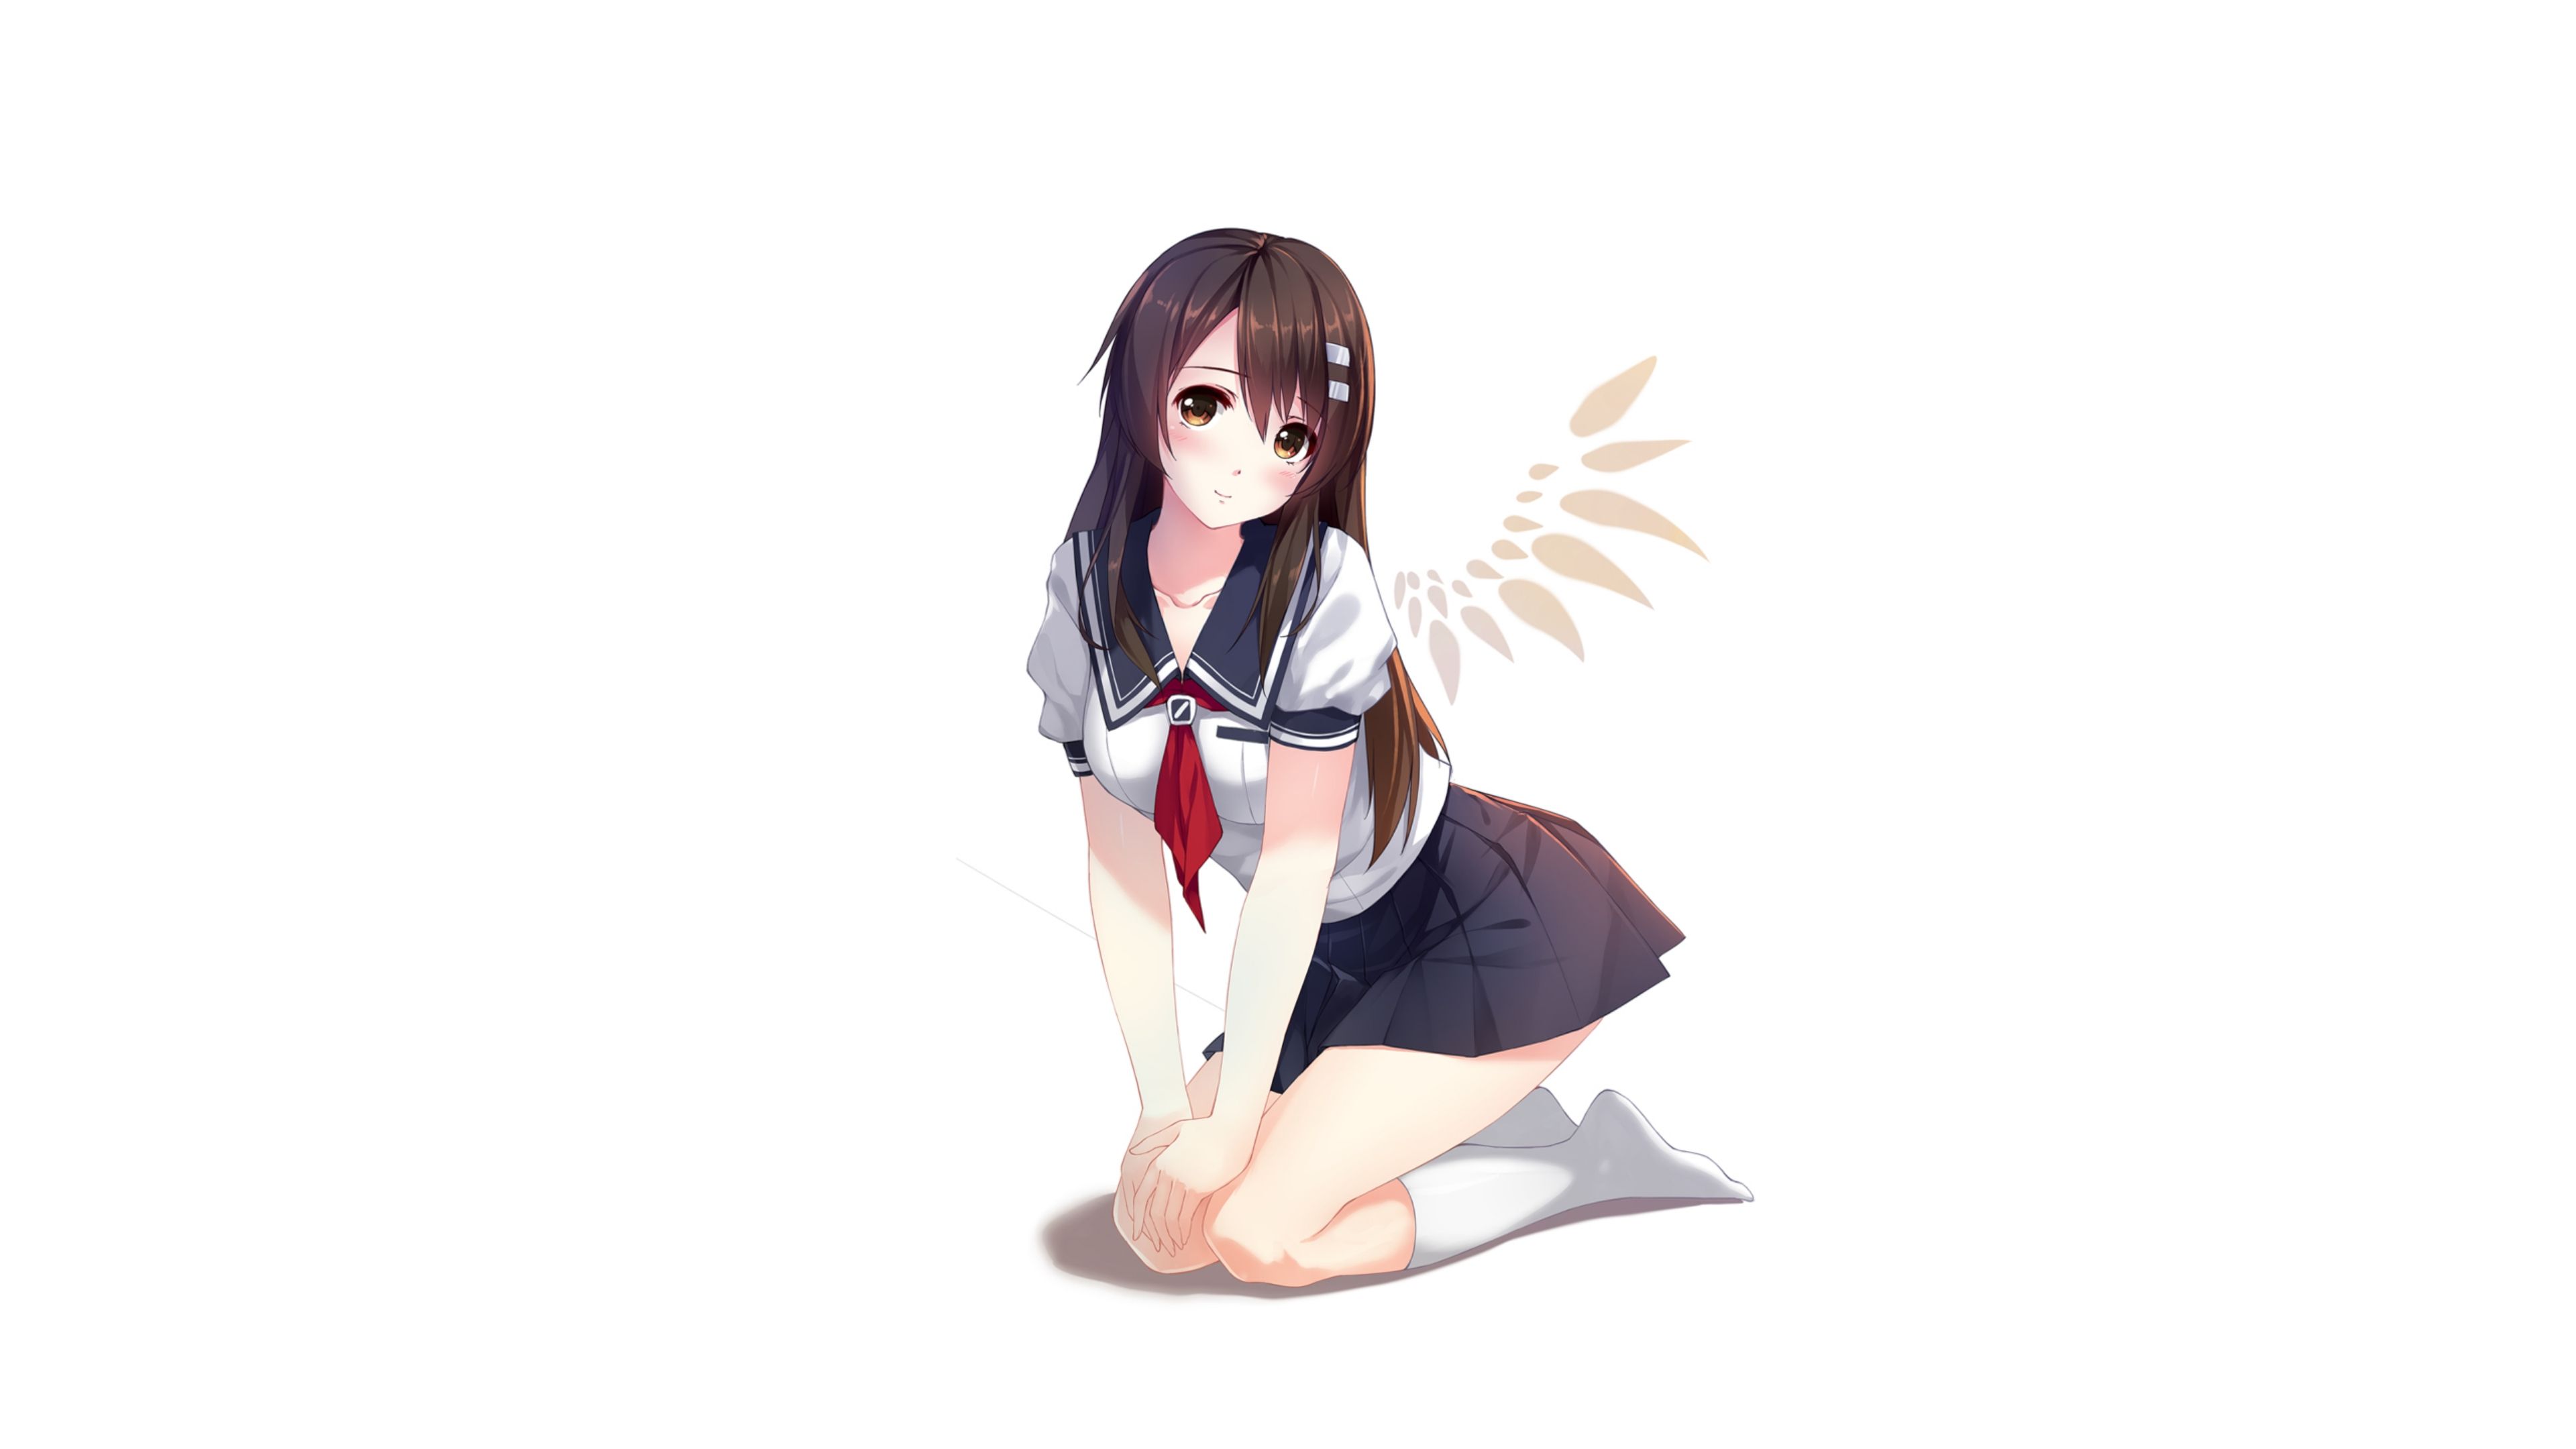 Download Cute, anime girl, school uniform, art wallpaper, 3840x 4K UHD 16: Widescreen